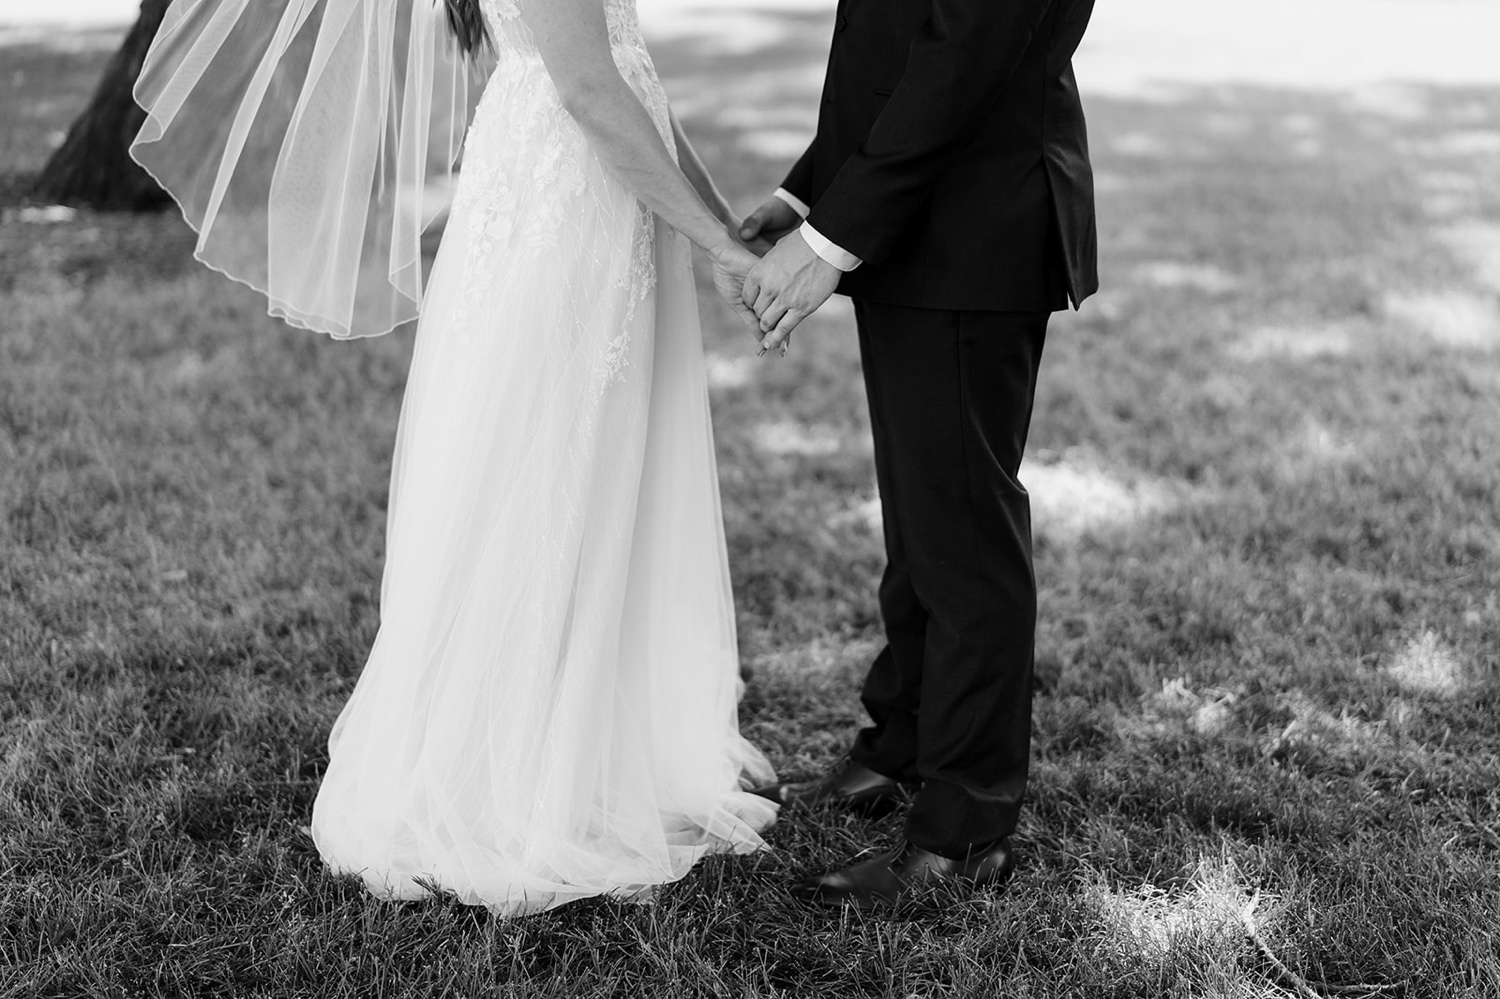 First look photo at Mayowood Stone Barn wedding. Minnesota wedding photographer.